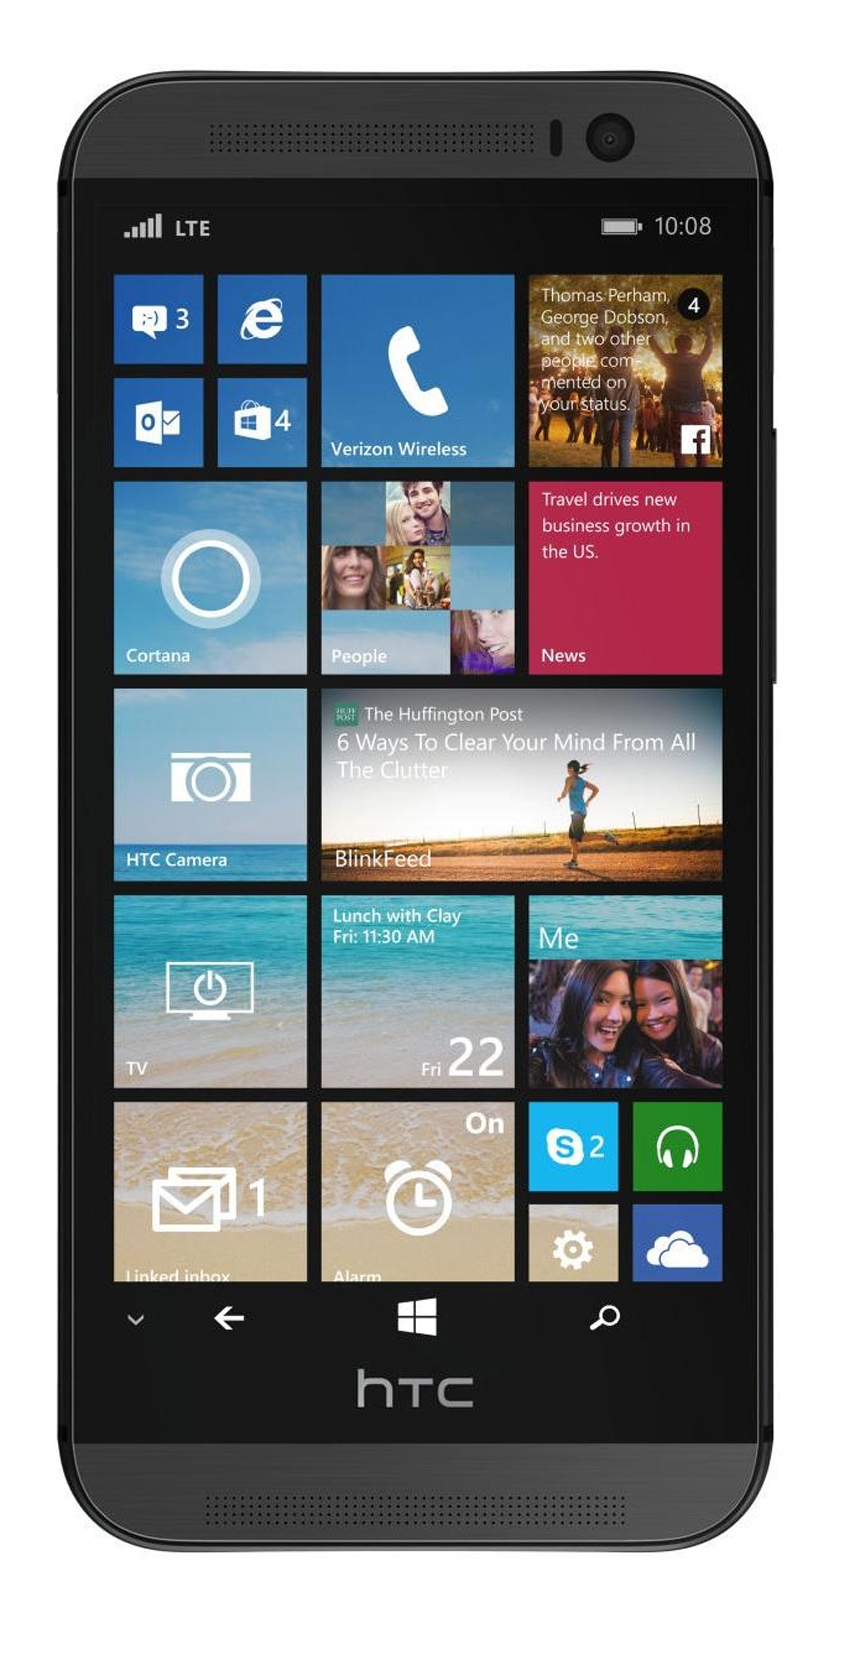 Windows Phone applications